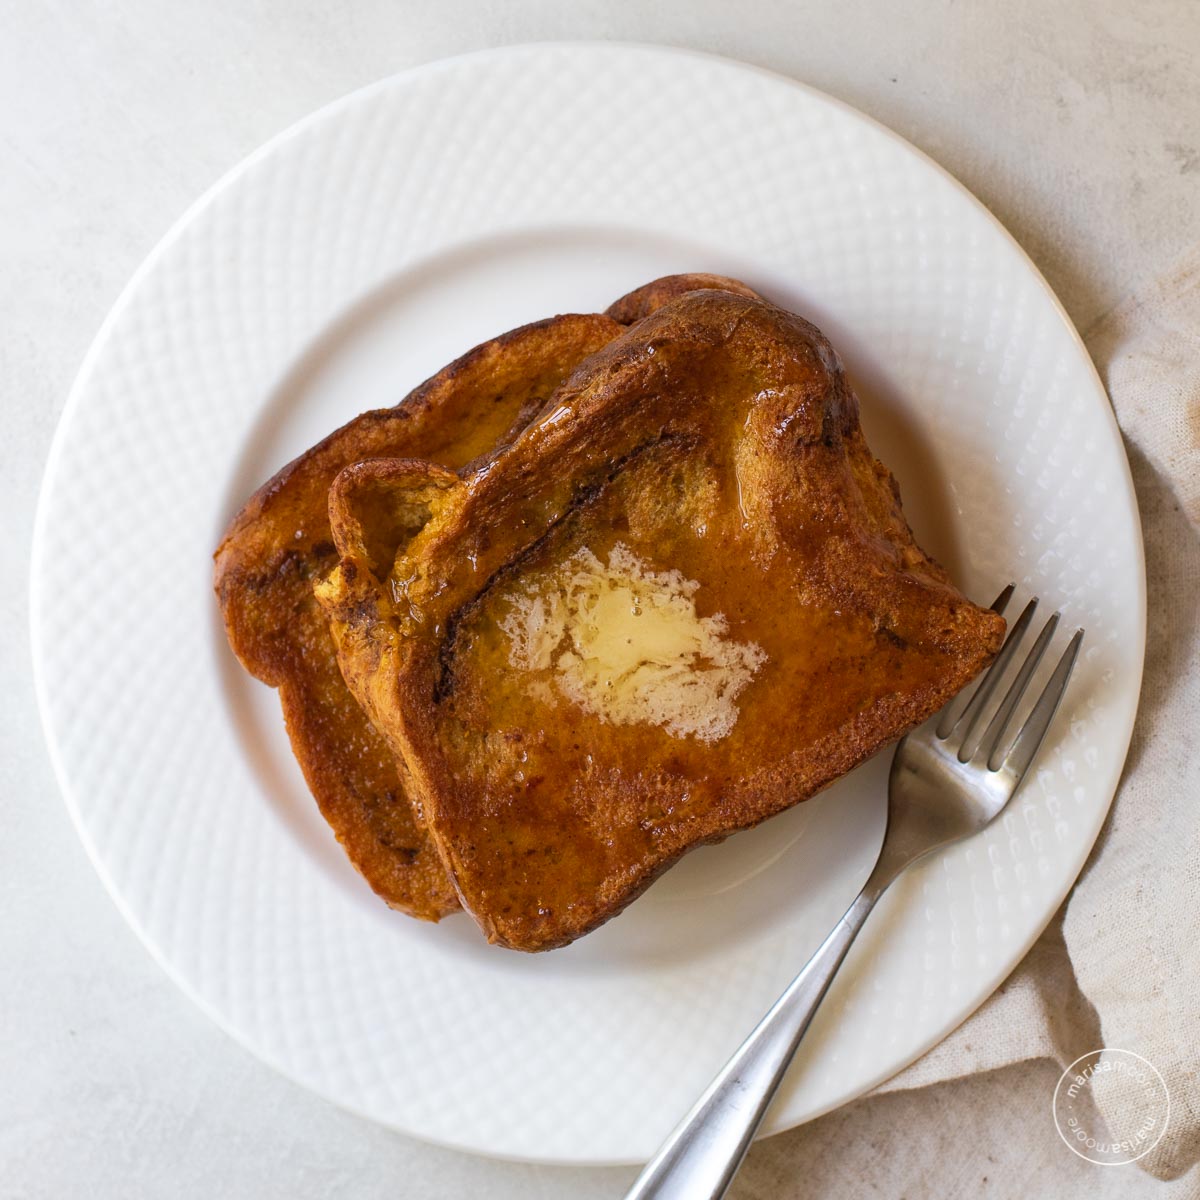 https://marisamoore.com/wp-content/uploads/2021/10/Baked-French-Toast-Recipe.jpg